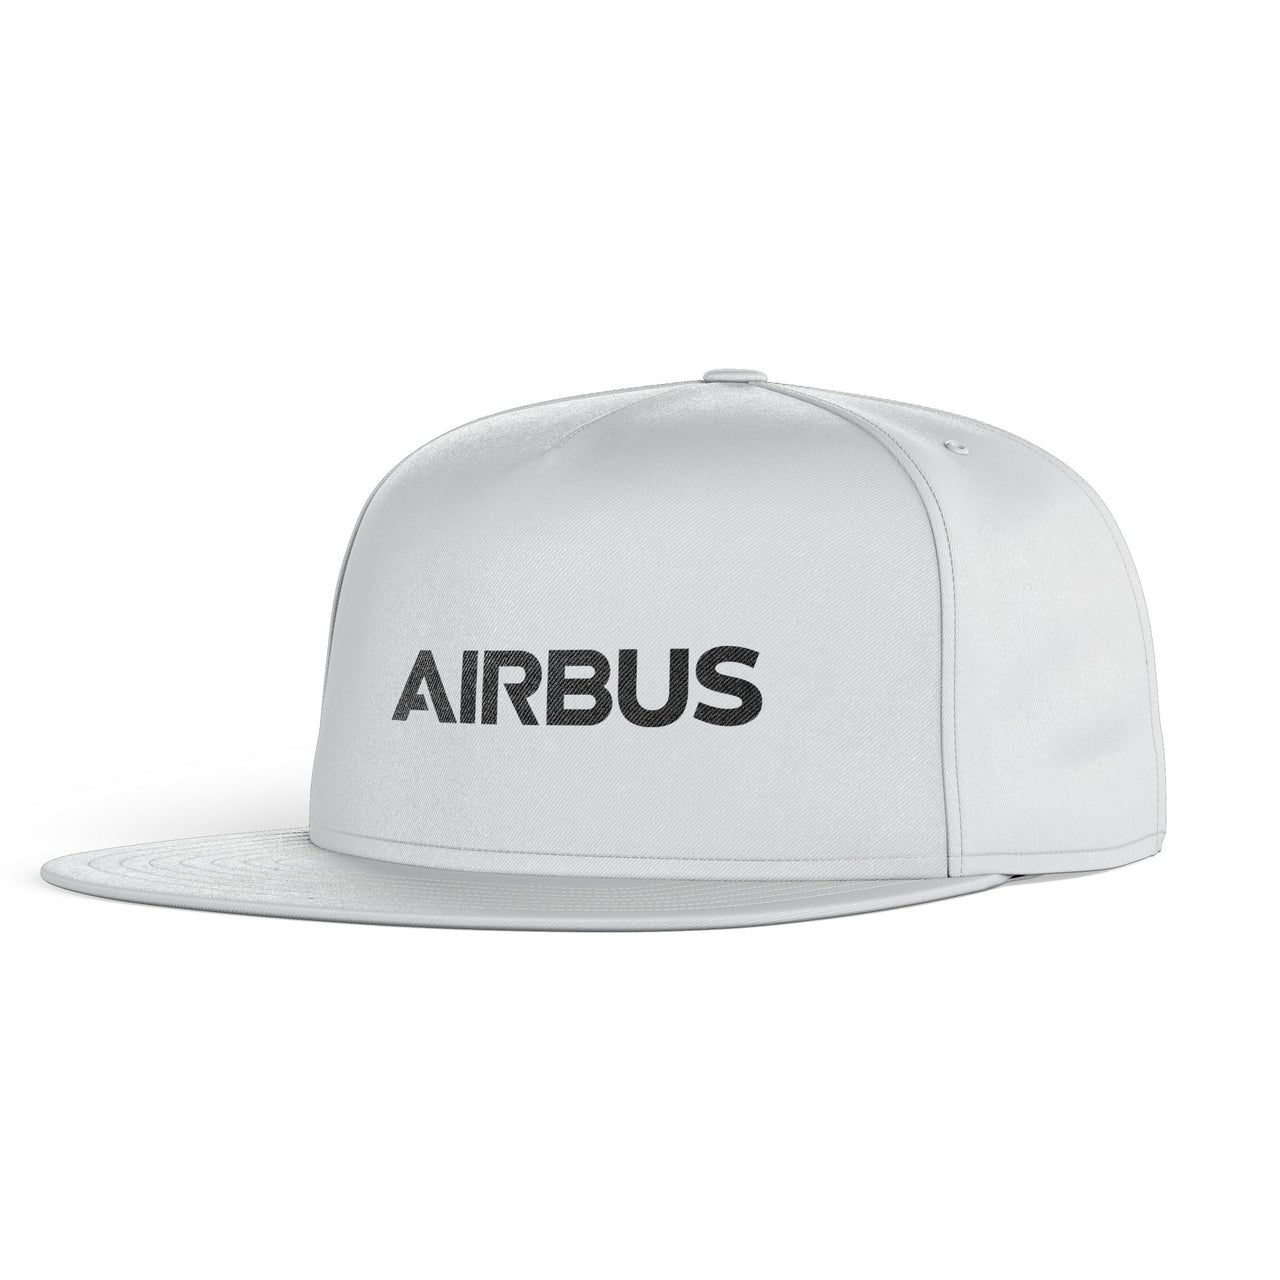 Airbus & Text Designed Snapback Caps & Hats